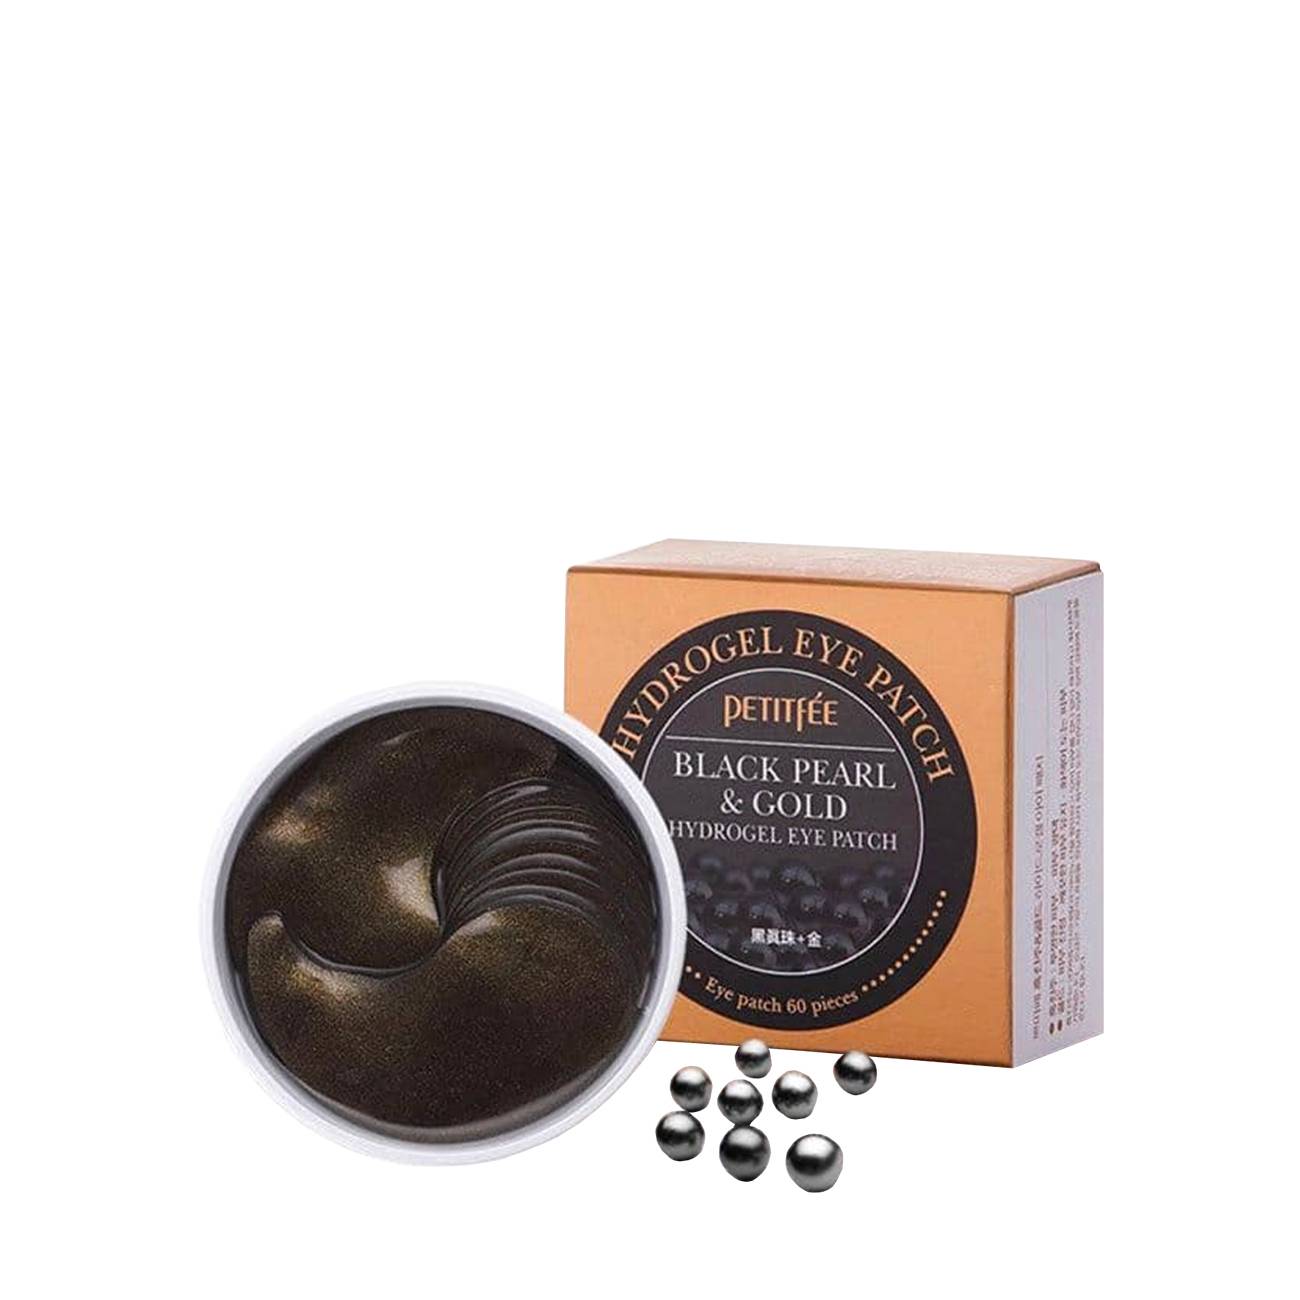 Pearl & Gold Hydrogel Eye Patch – 60 pieces 84 gr bestvalue